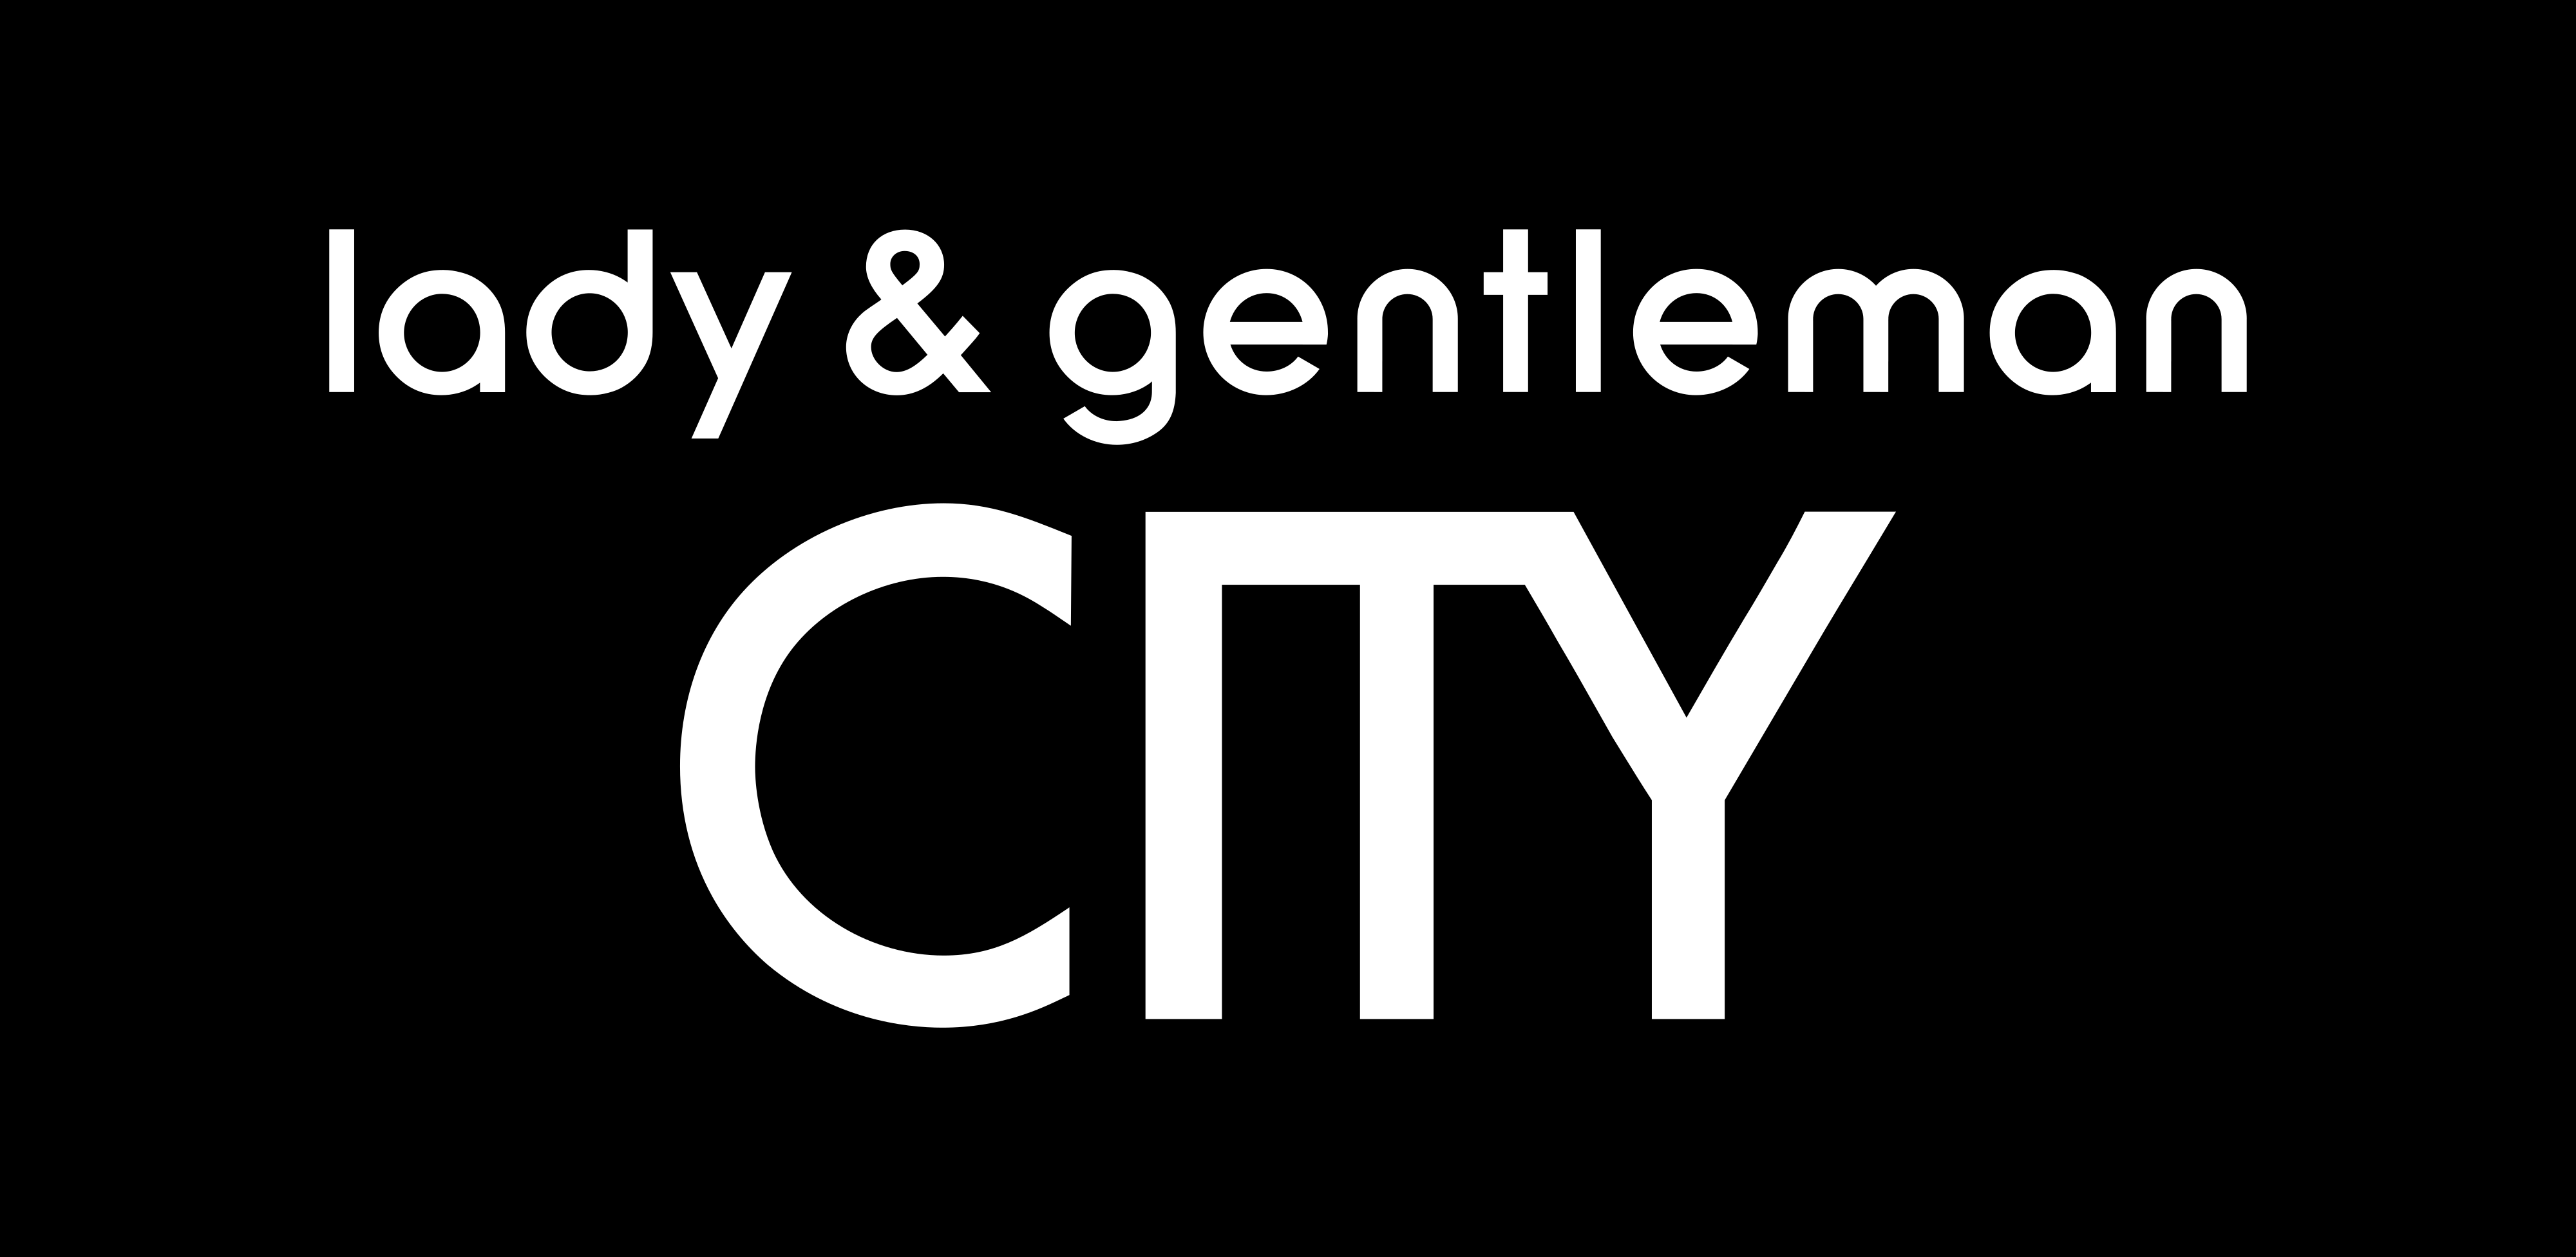 Lady and gentleman. Леди энд джентльмен. Lady and Gentleman City логотип. Lady Gentleman City Тюмень. Леди джентльмен дисконт.